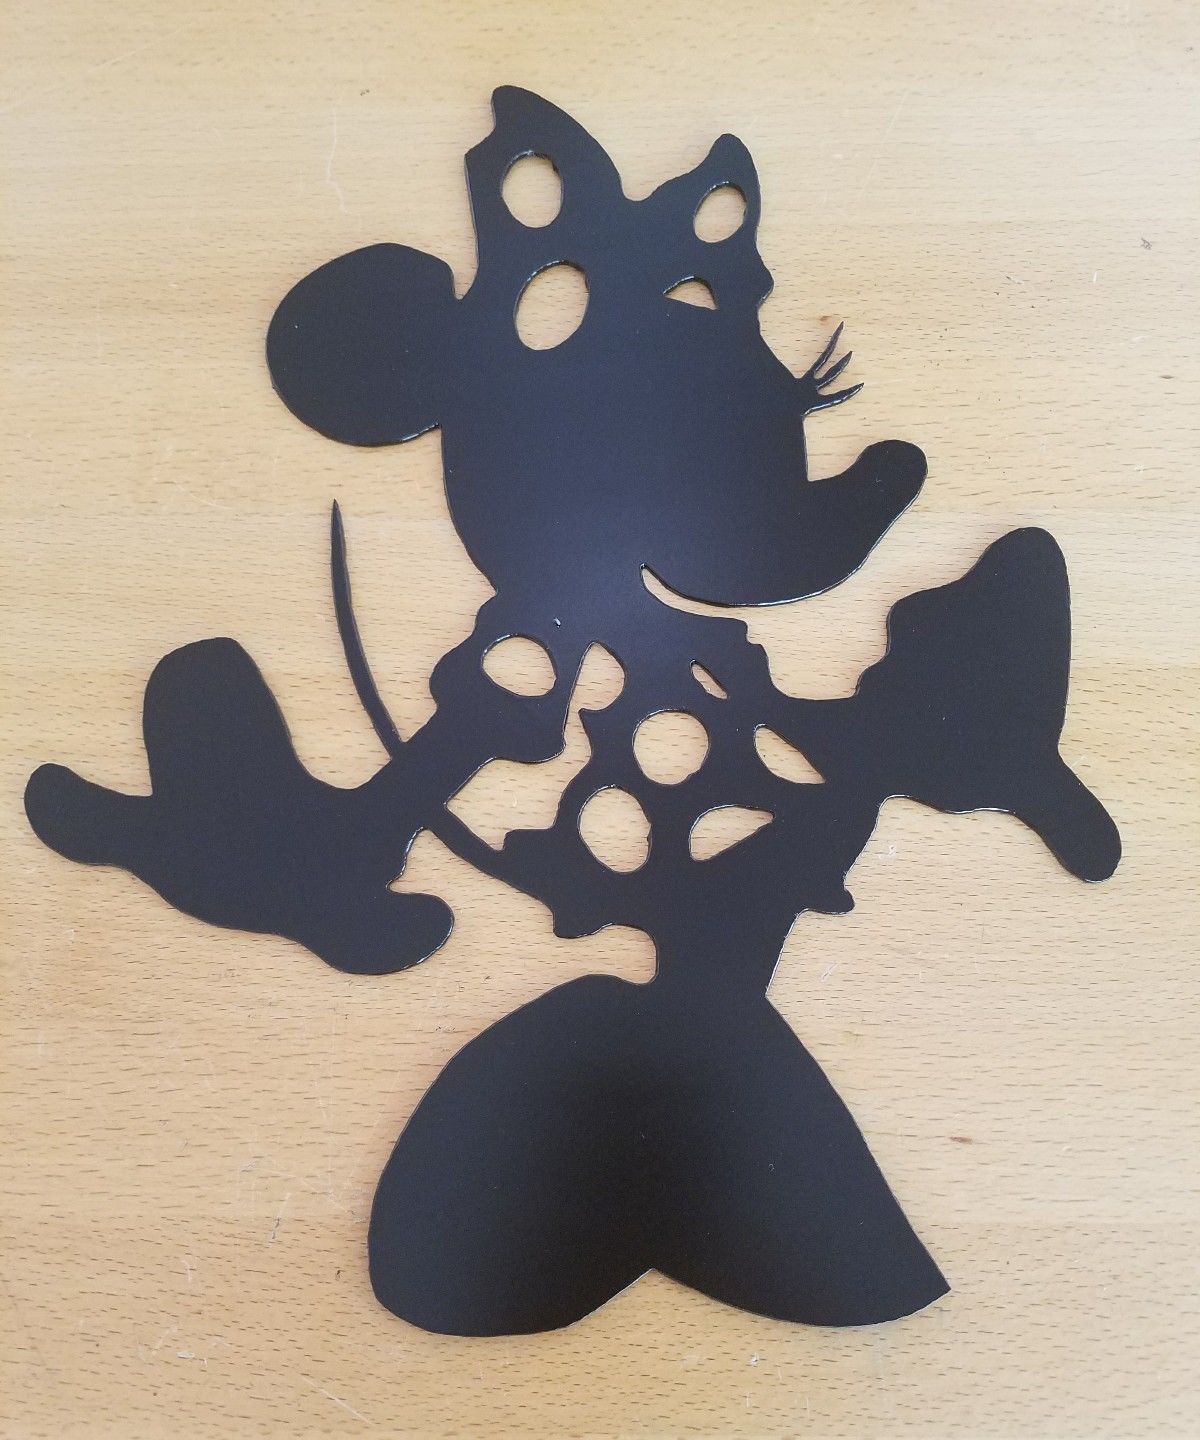 Minnie Mouse metal wall art plasma cut sign gift idea 